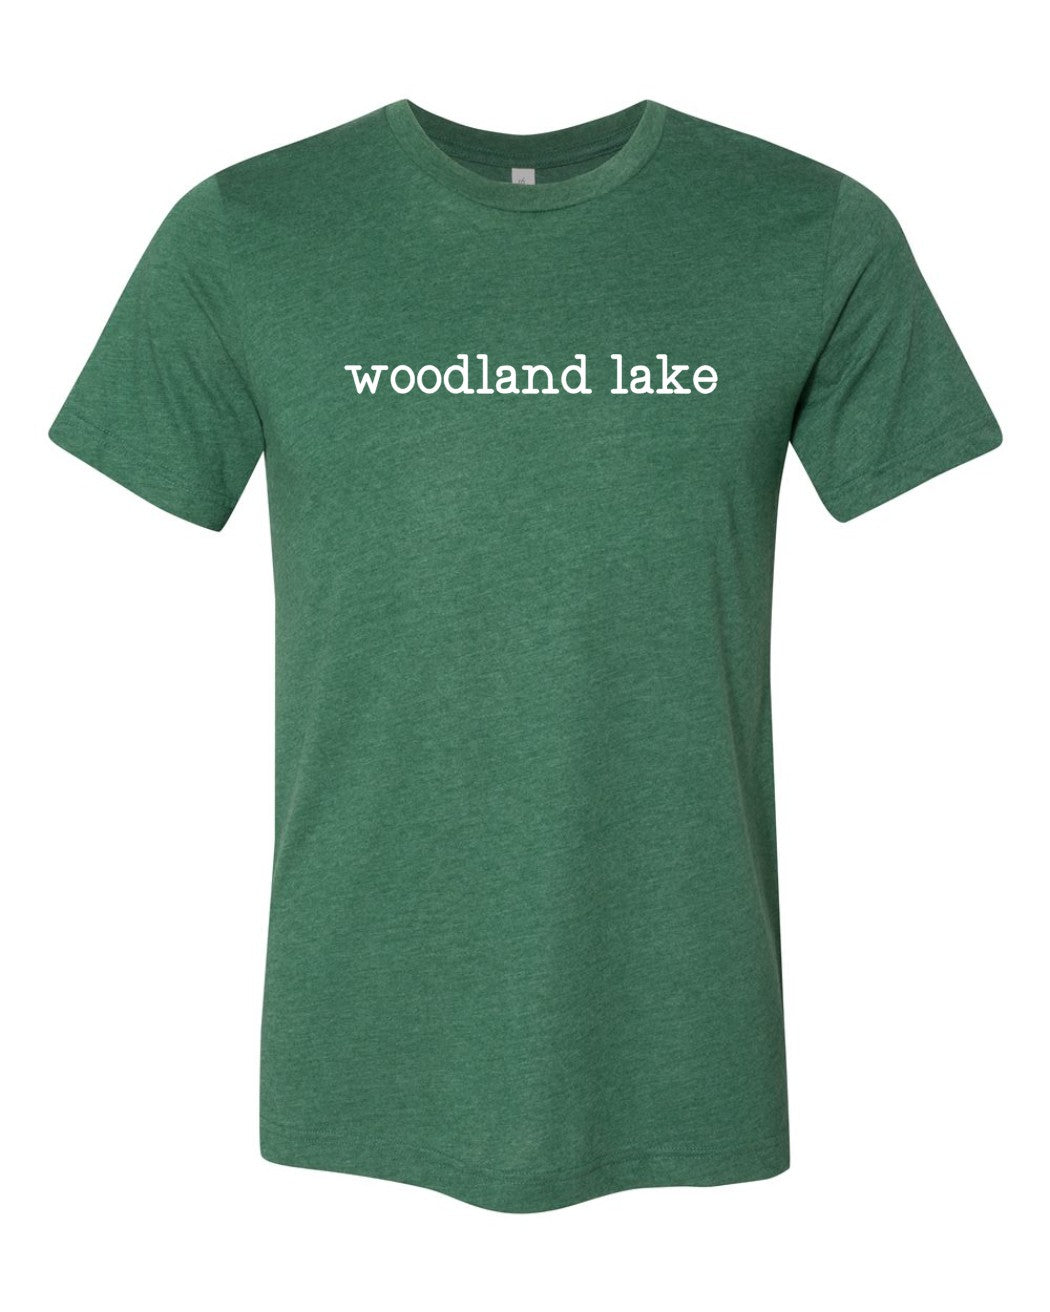 Woodland Lake Premium Tee